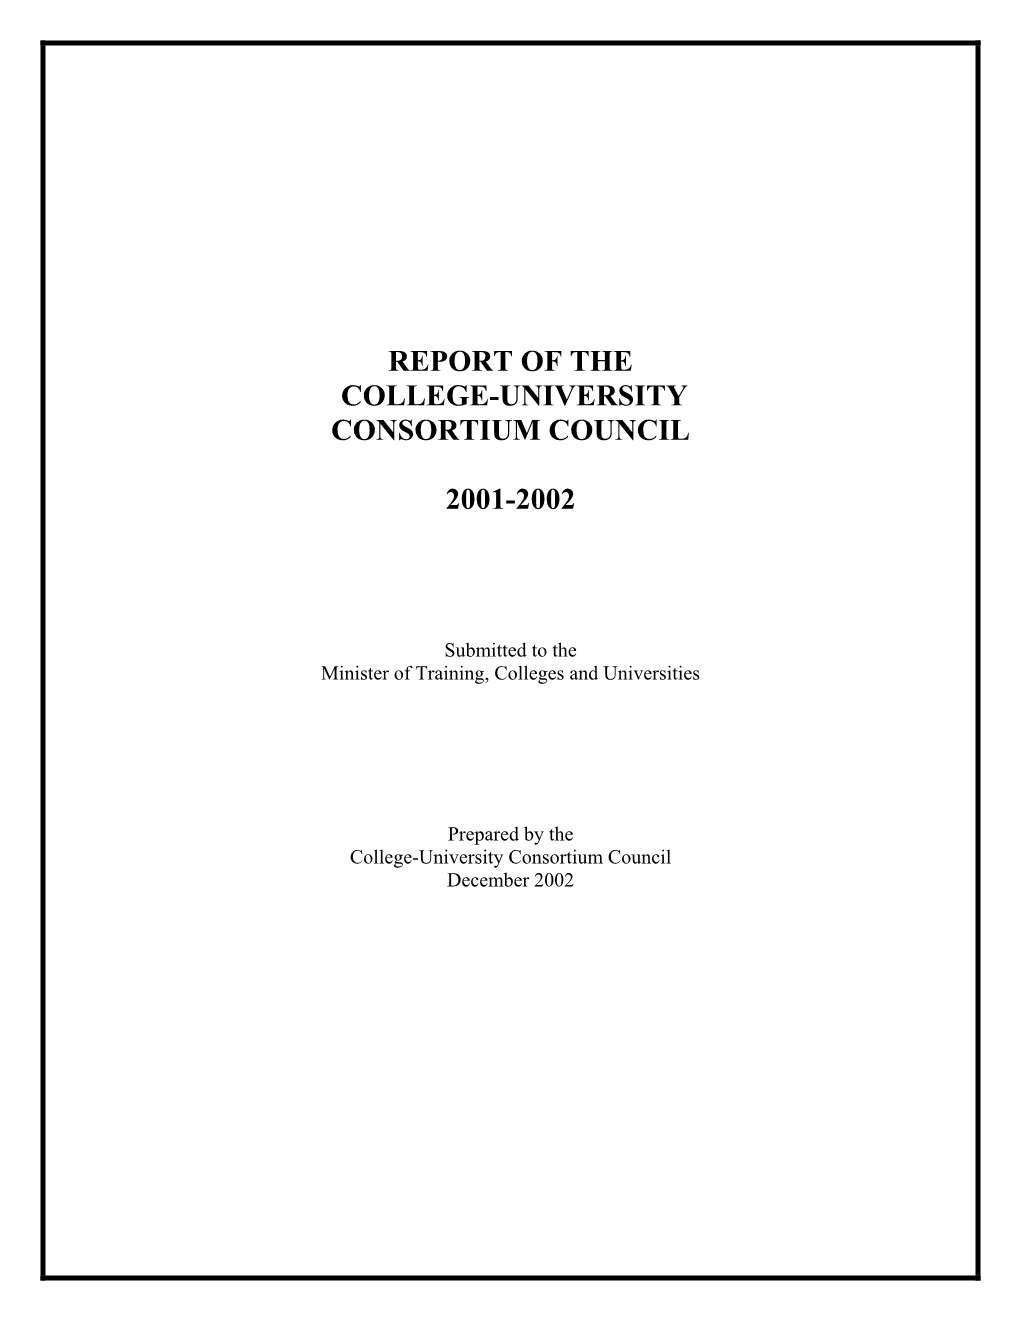 Report of the College-University Consortium Council